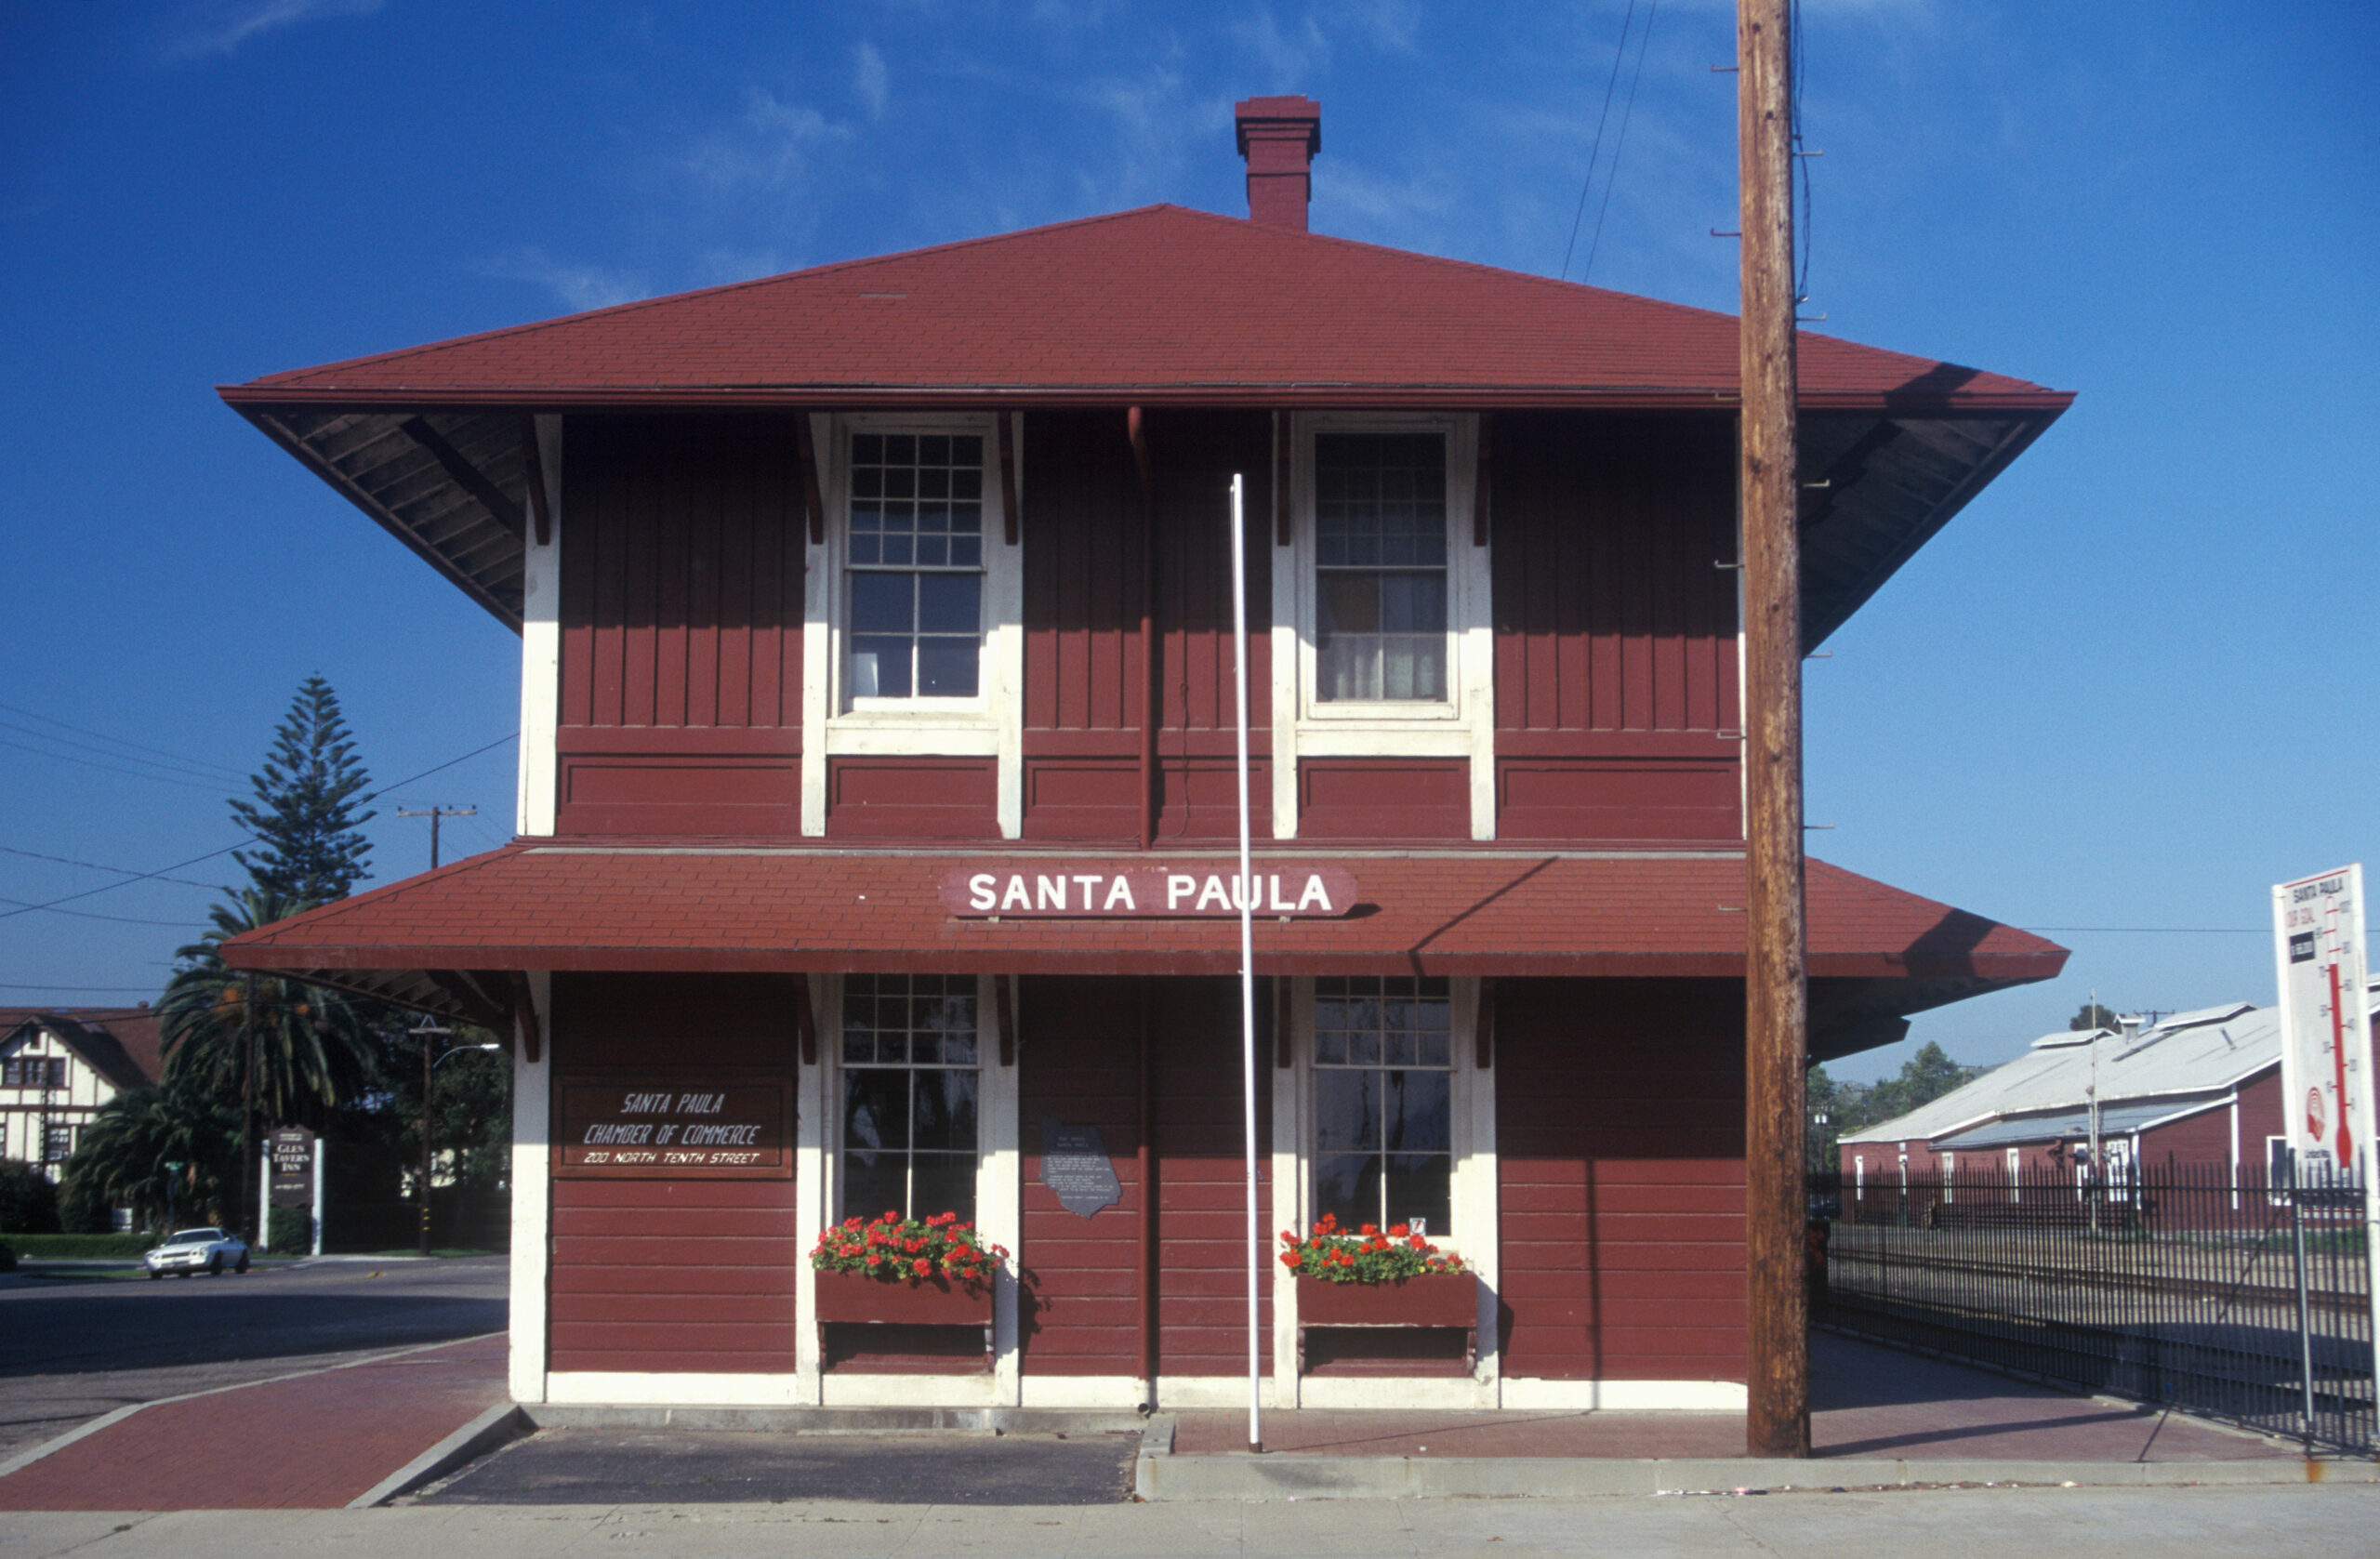 Santa Paula Historic Train Station in Santa Paula, California